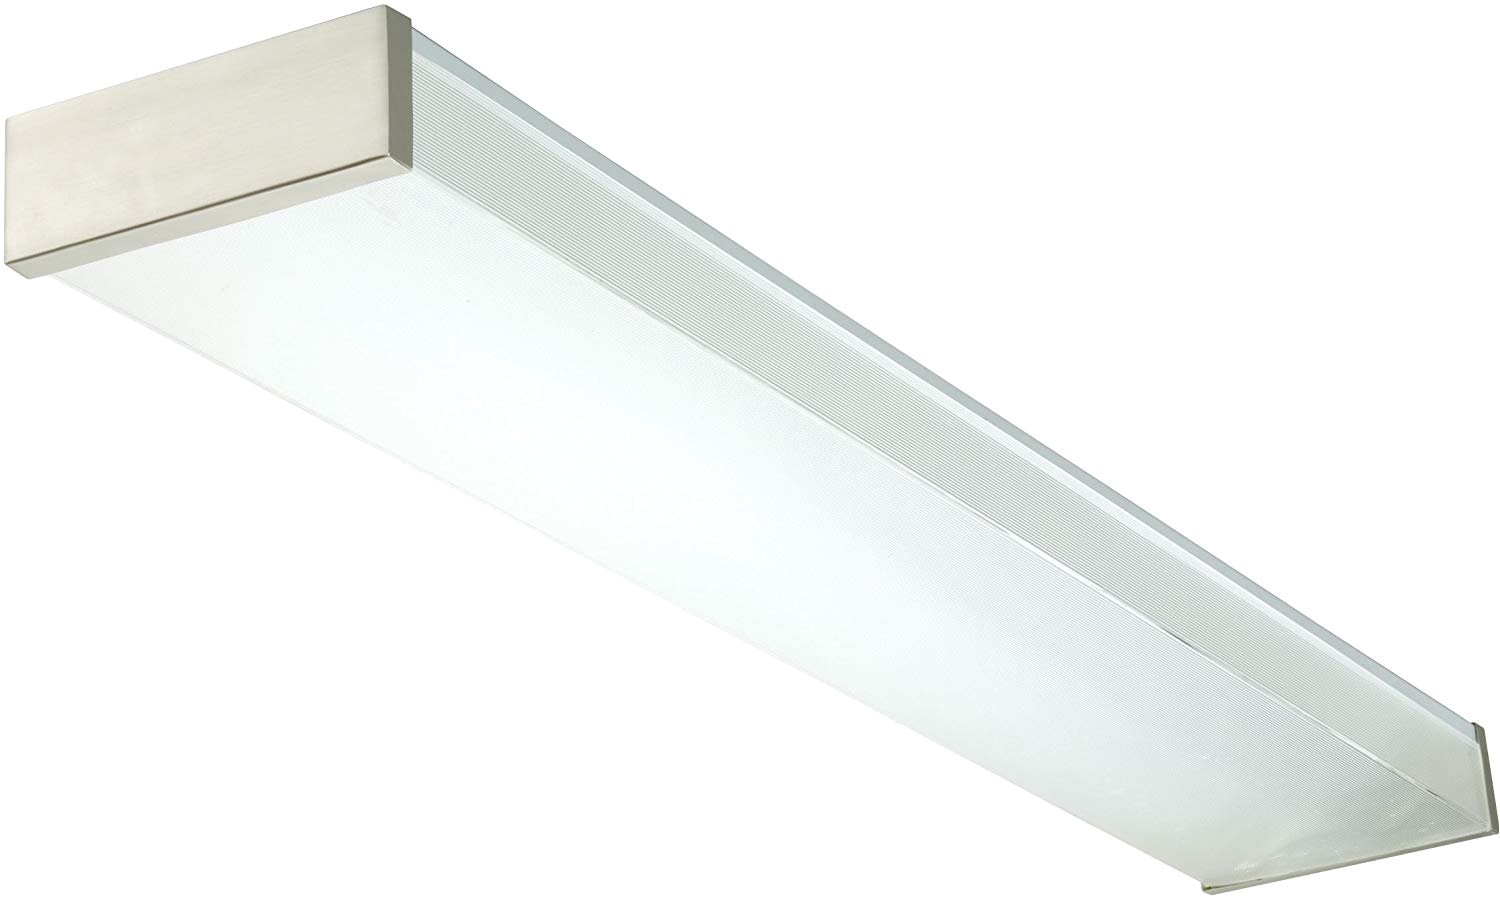 lithonia lighting new 2 32 120 re bn fluorescent wraparound nickel close to ceiling light fixtures amazon com